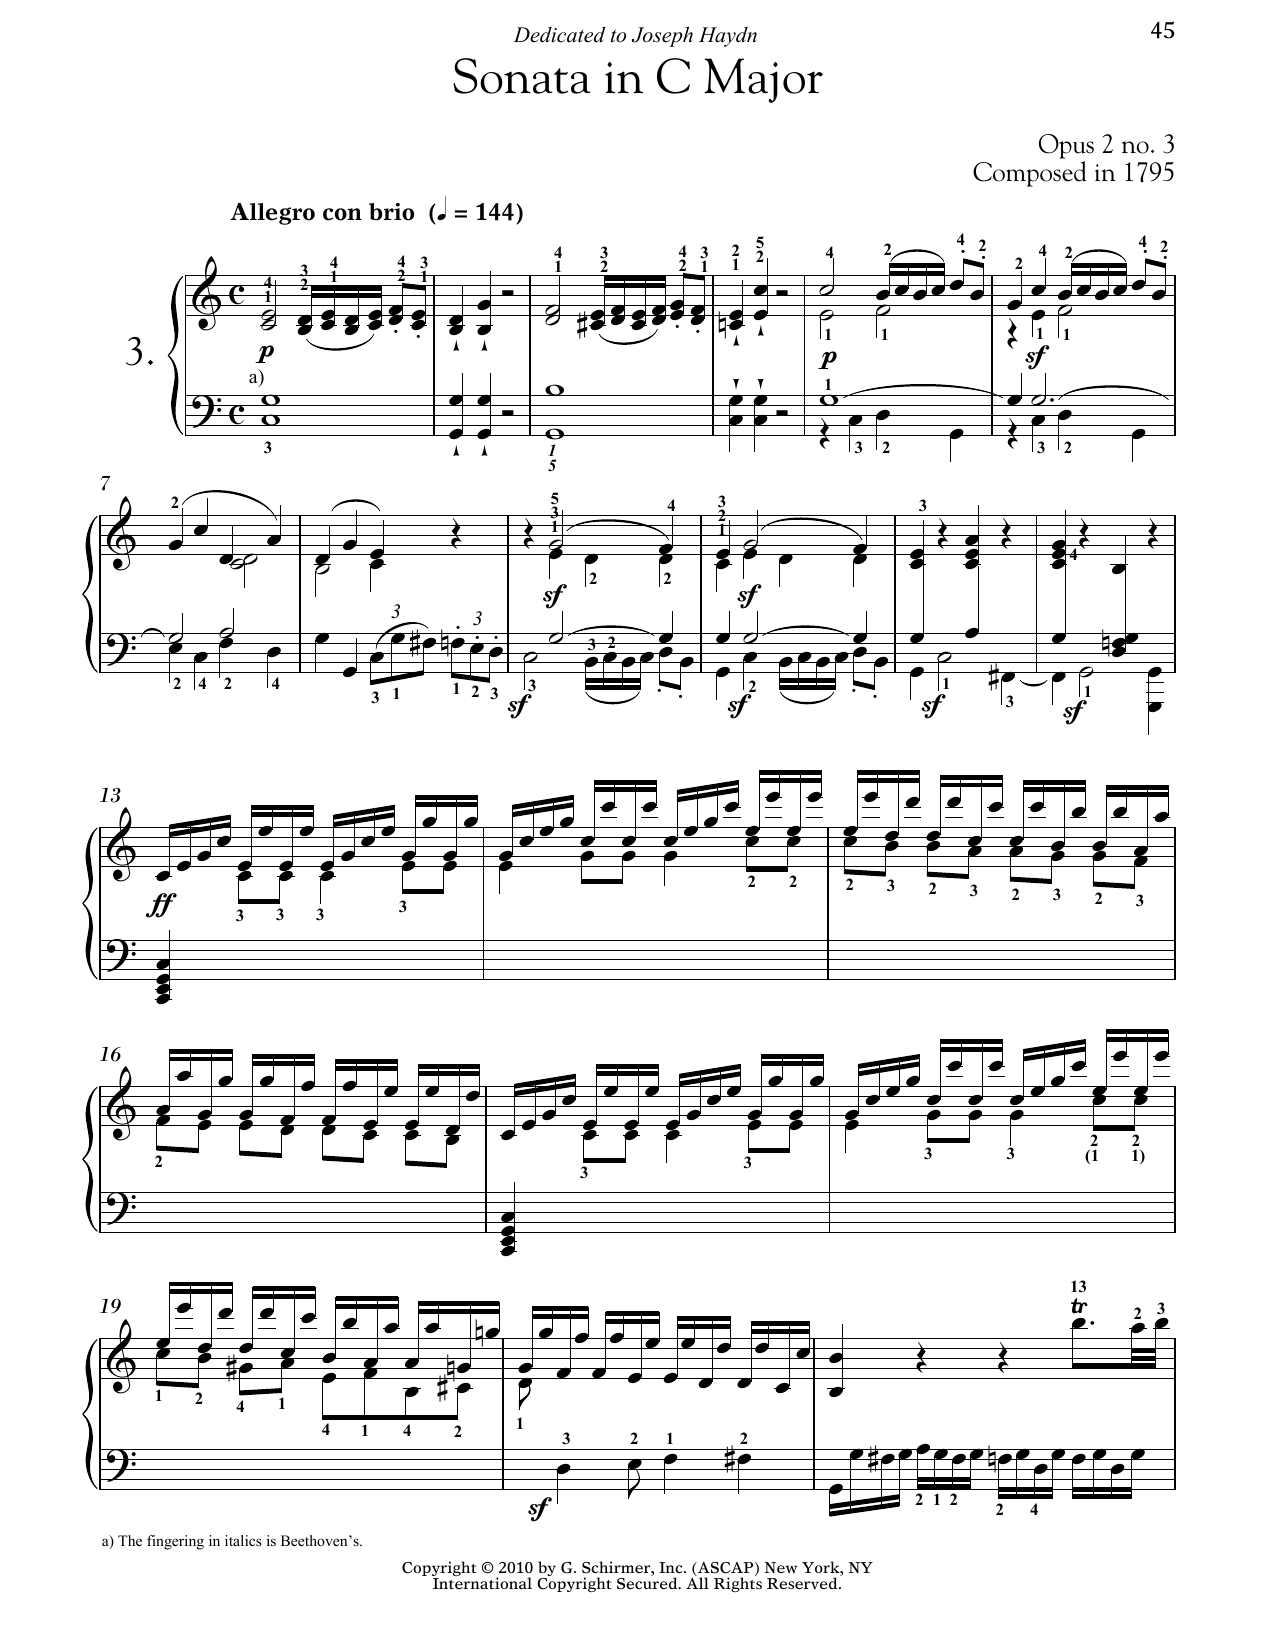 Ludwig van Beethoven Piano Sonata No. 3 In C Major, Op. 2, No. 3 Sheet Music Notes & Chords for Piano - Download or Print PDF